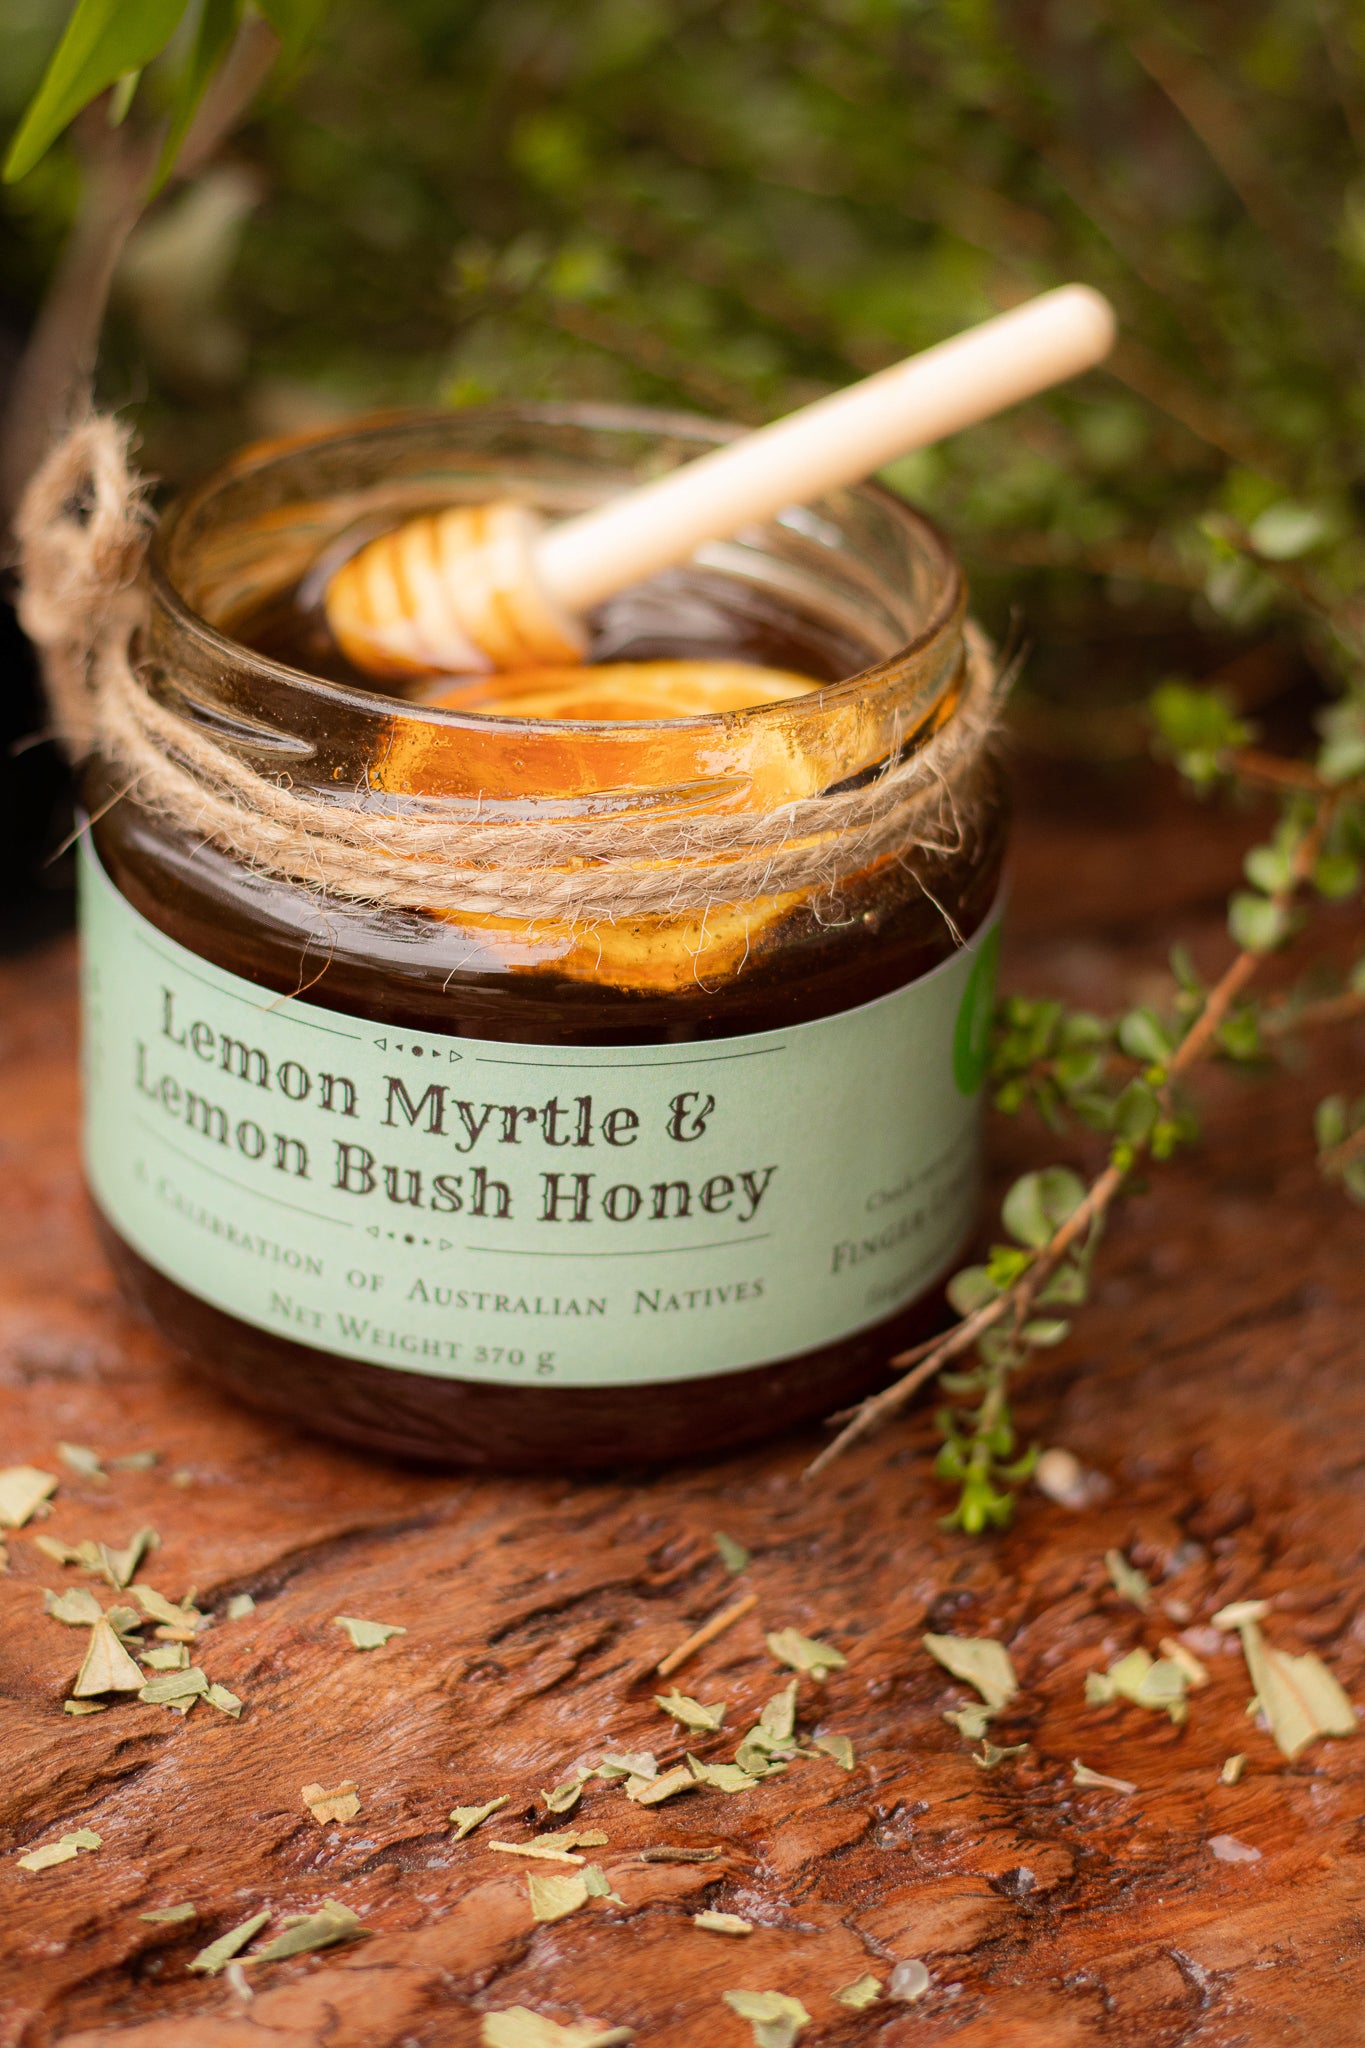 Lemon Myrtle & Lemon Bush Honey